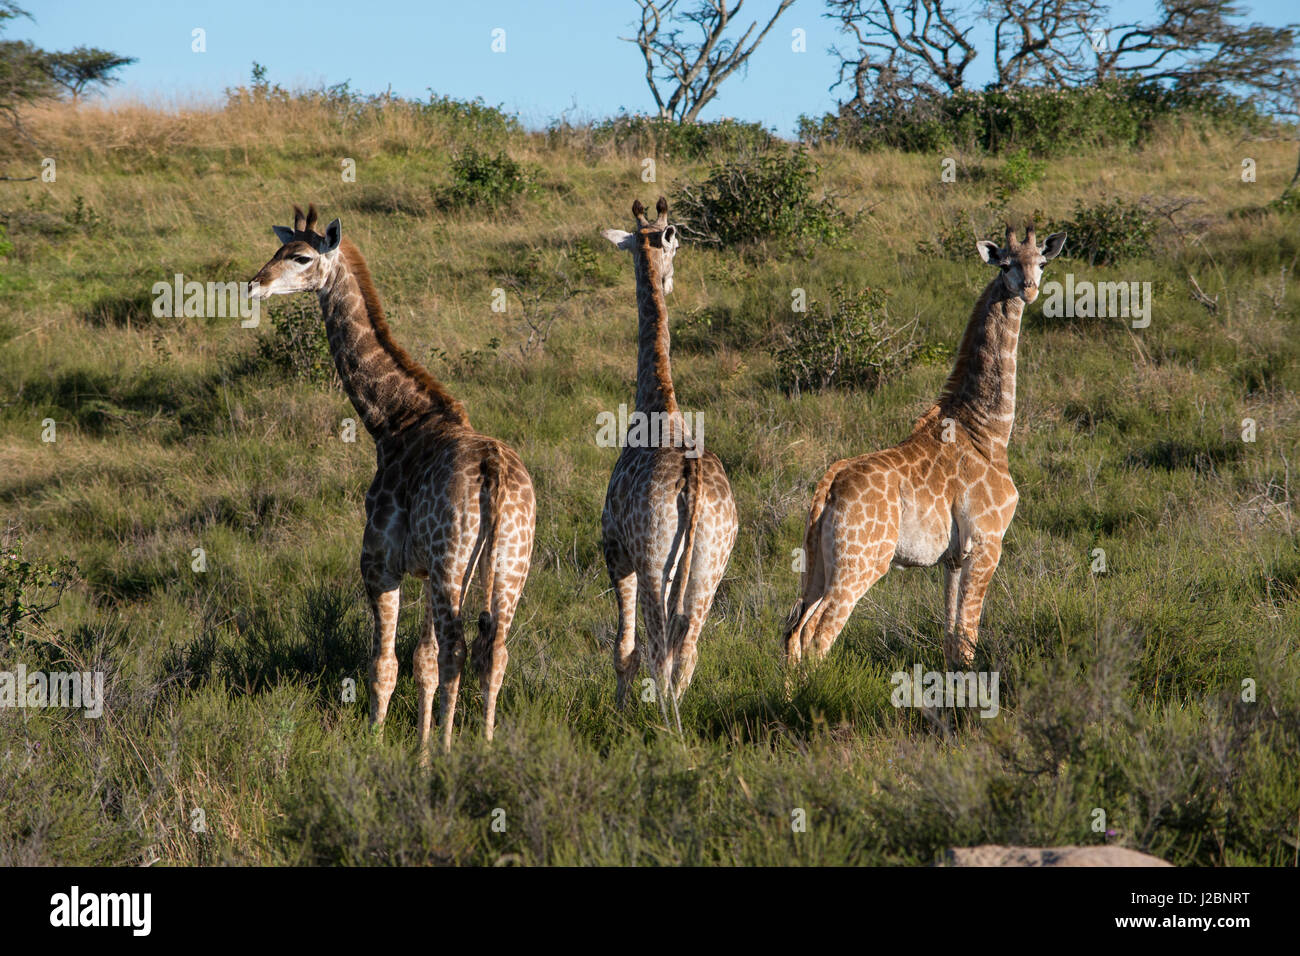 South Africa, Eastern Cape, East London. Inkwenkwezi Game Reserve. Herd of giraffe (Wild, Giraffa camelopardalis) in grassland habitat. Stock Photo